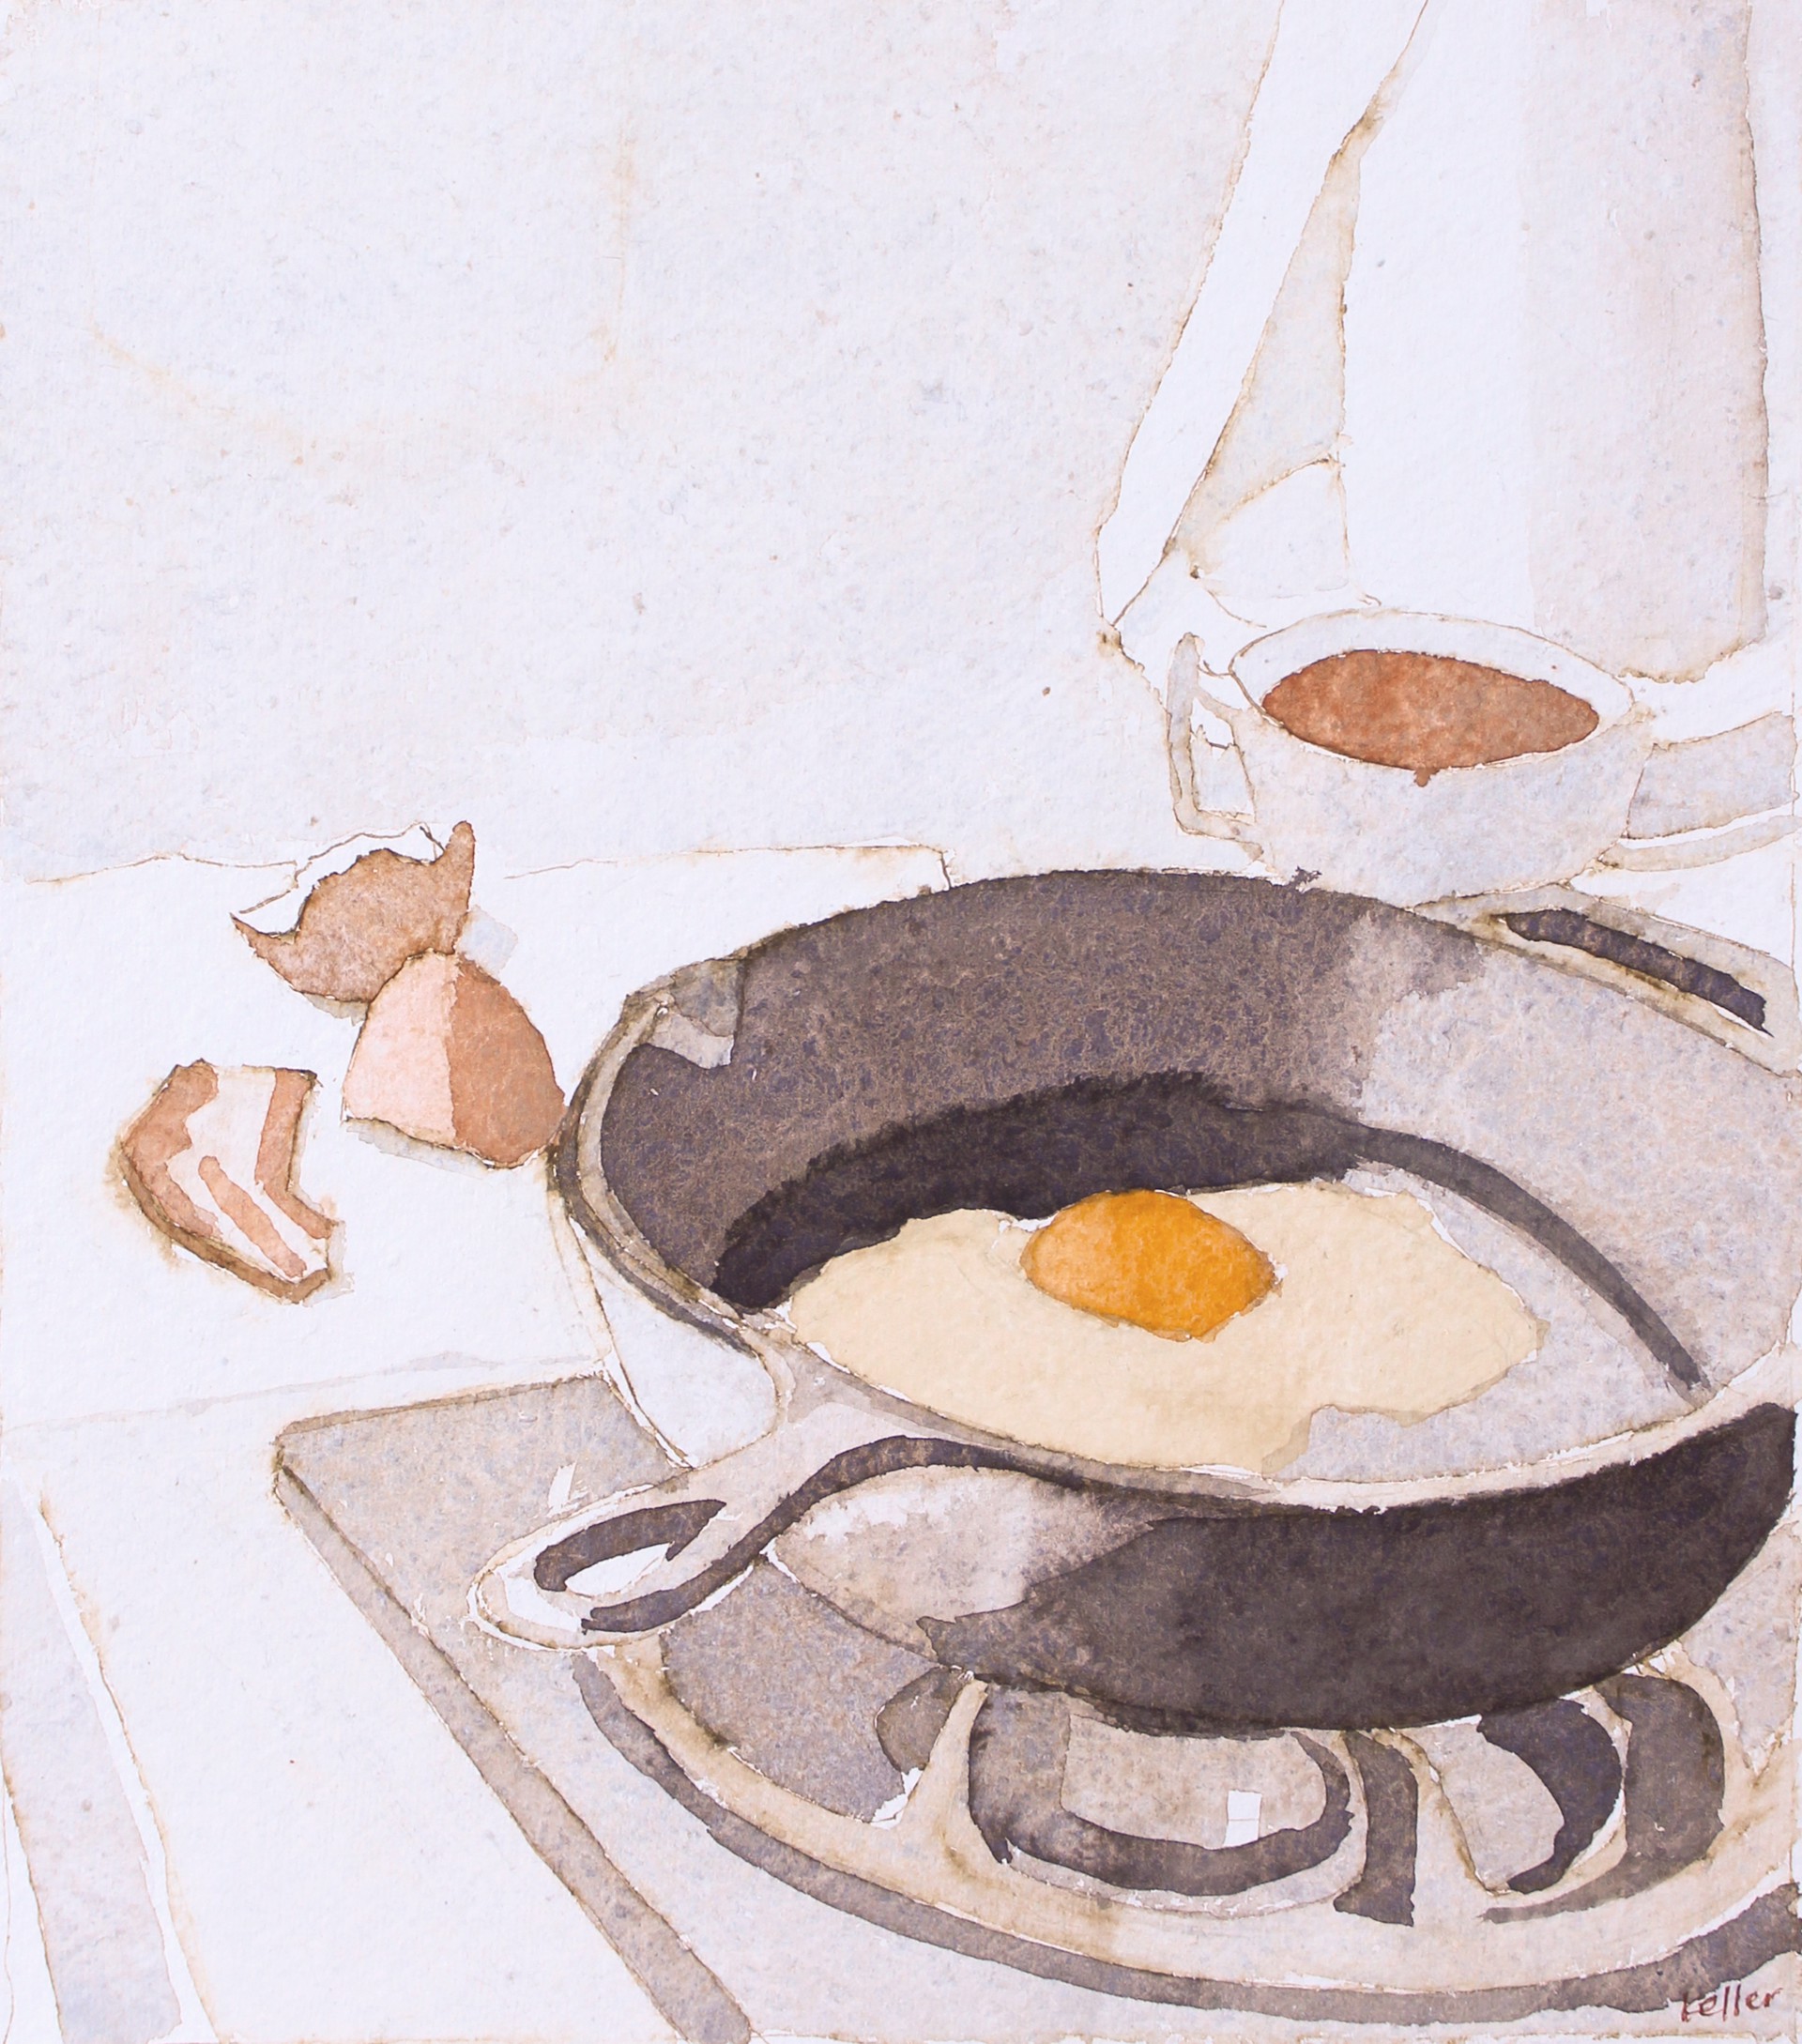 Fried Egg by Kathryn Keller